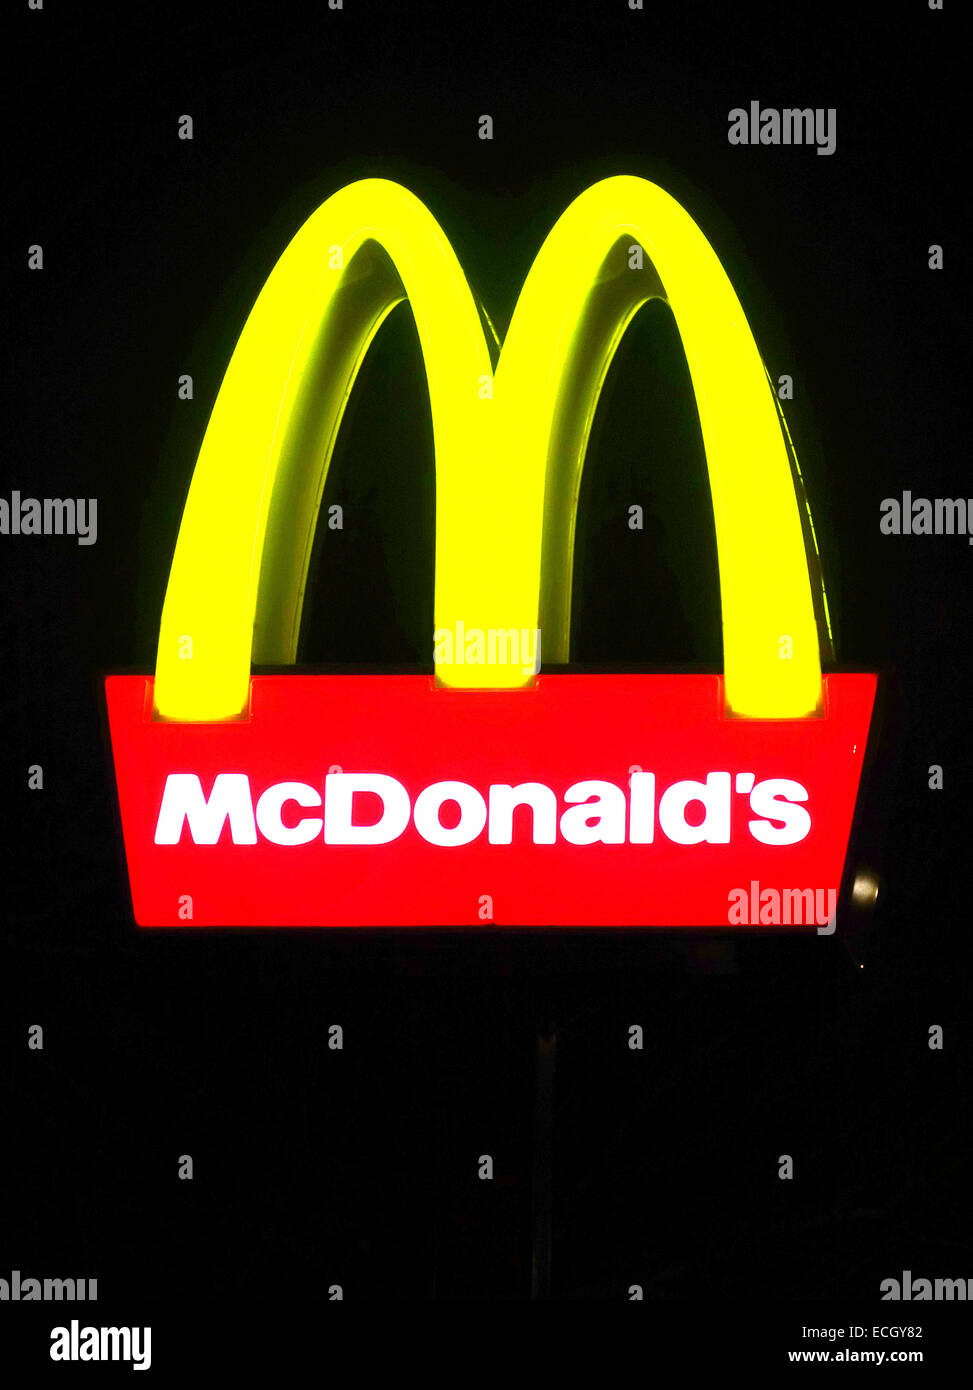 mcdonalds sign lit up at night Stock Photo